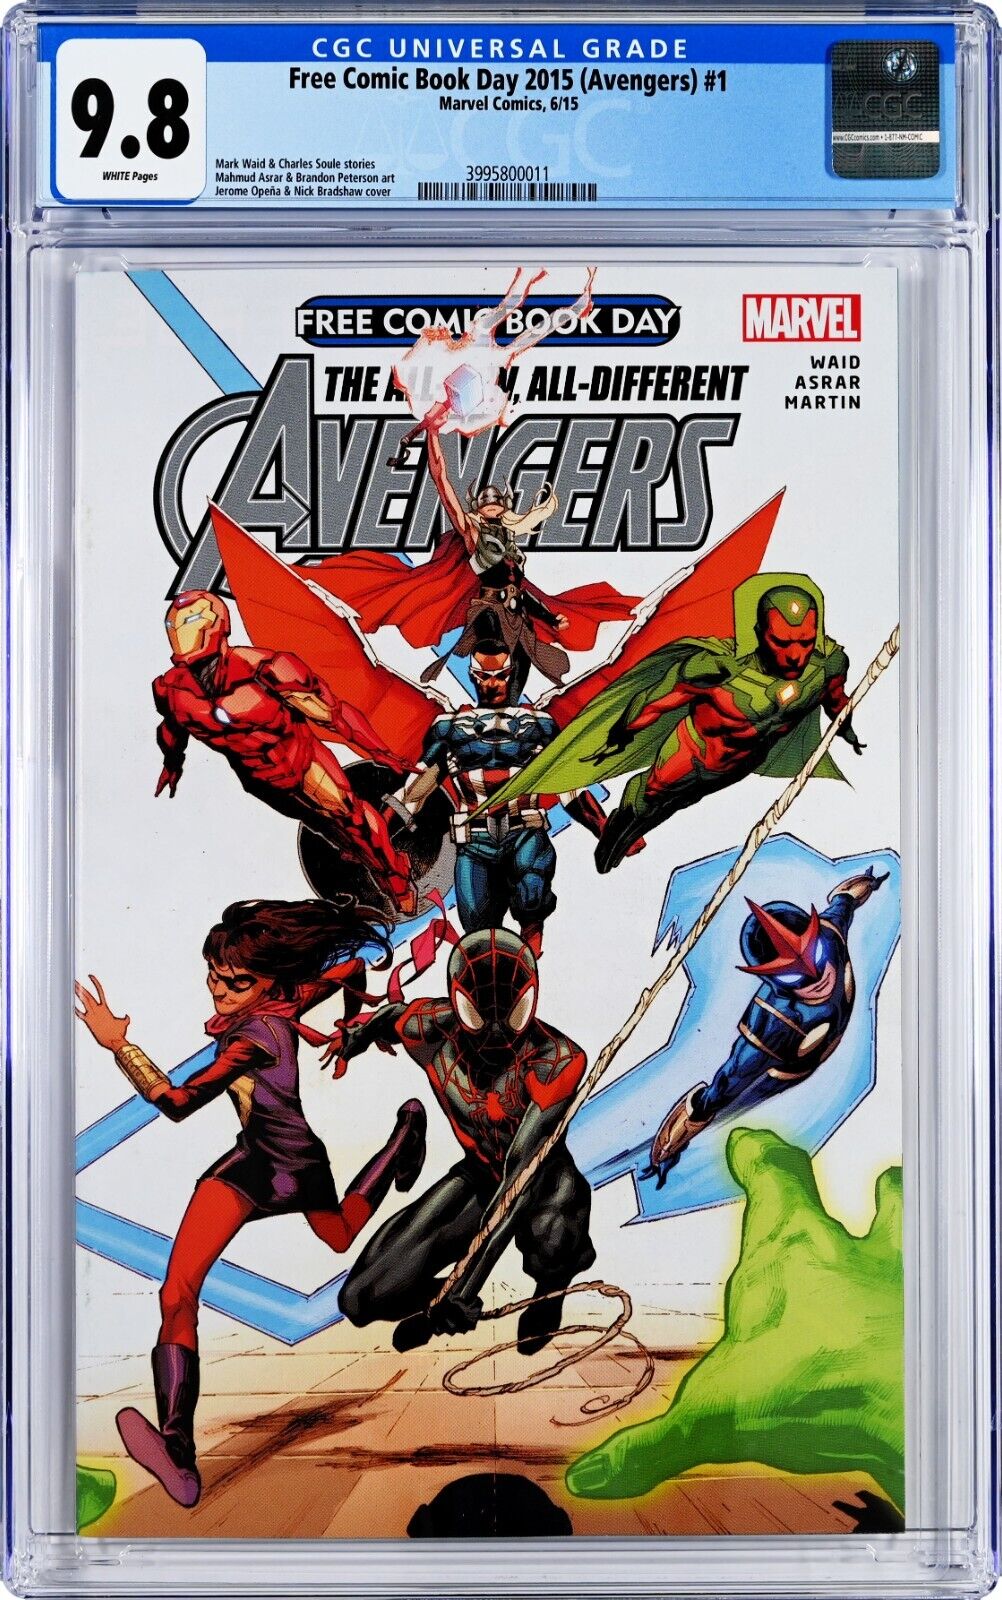 FCBD 2015 Avengers #1 CGC 9.8 (Jun 2015, Marvel) Mark Waid, All New Different